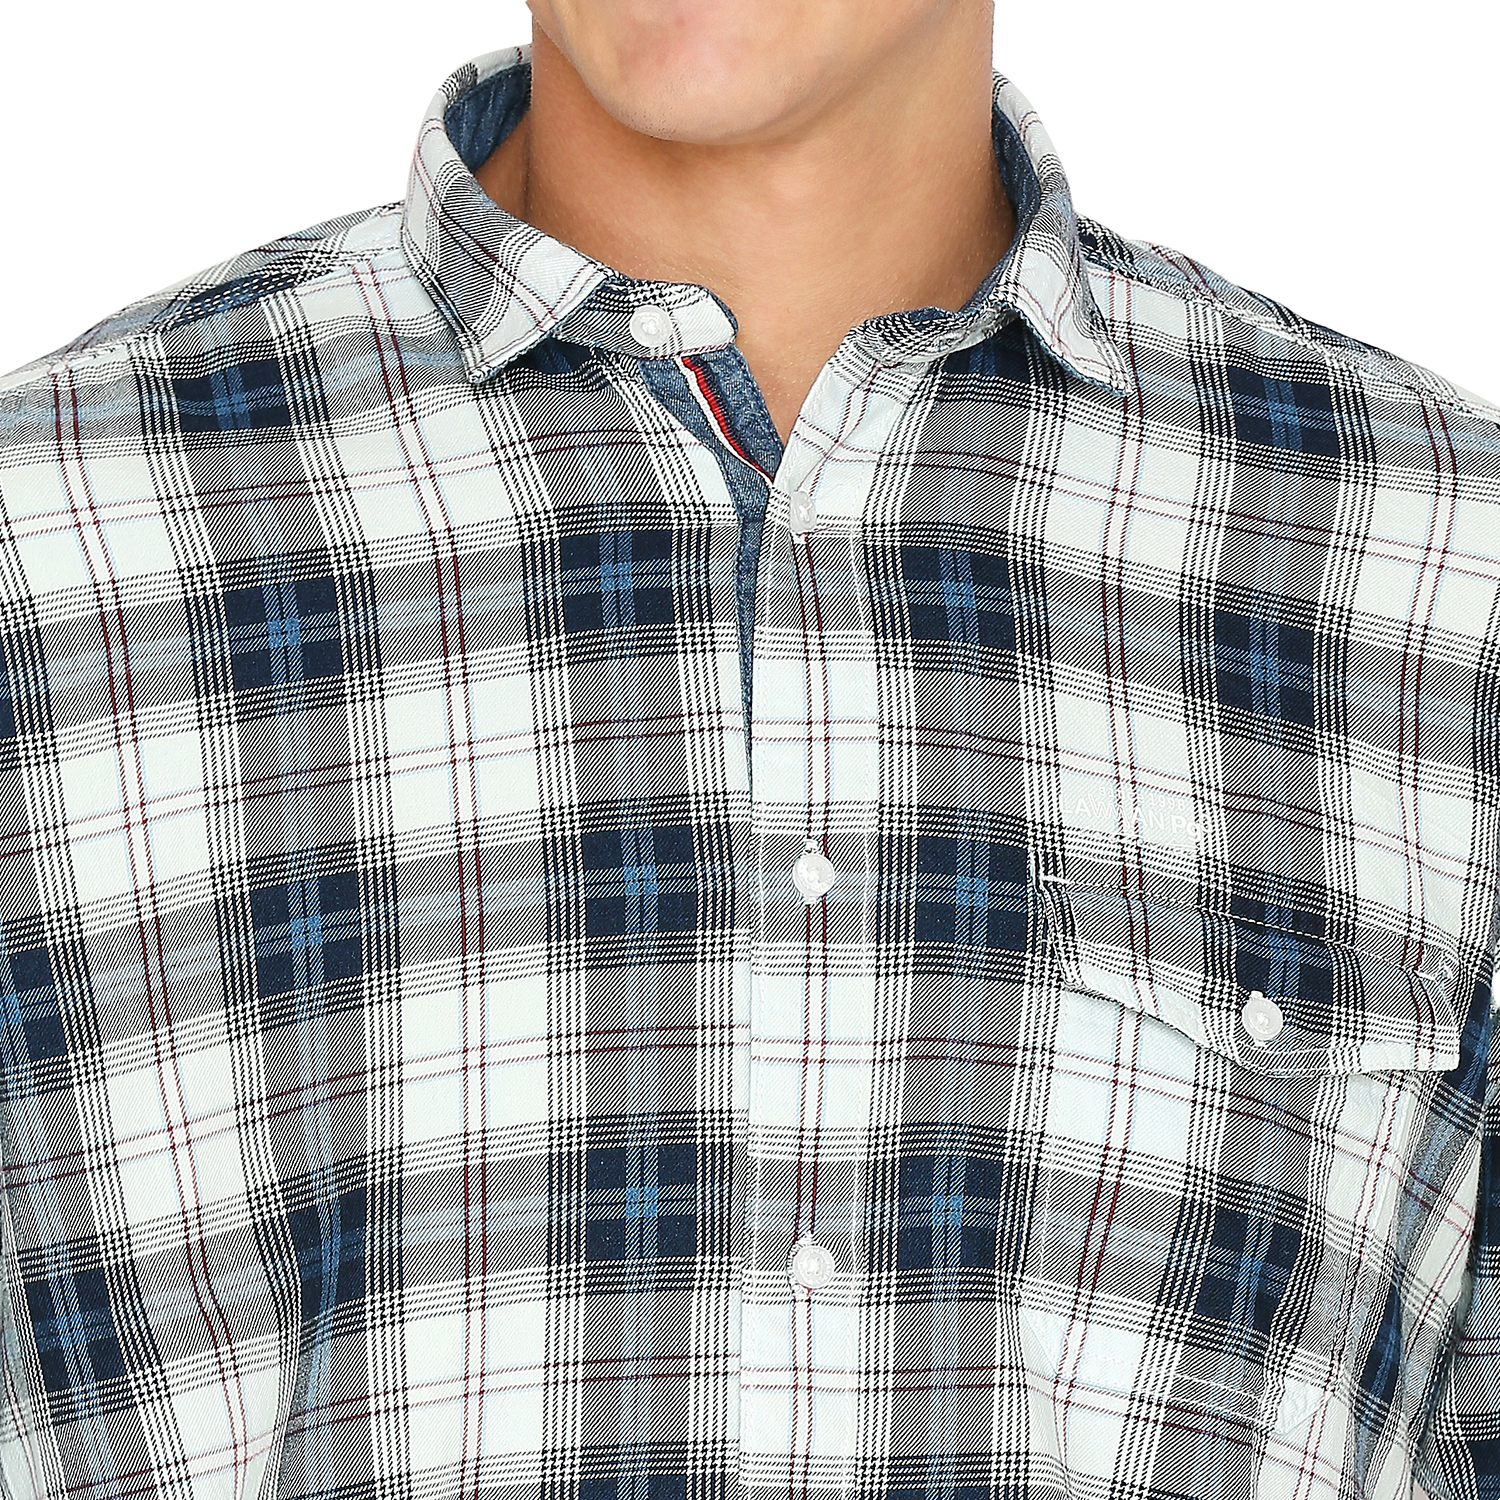 Lawman Men's Casual Checkered Shirt